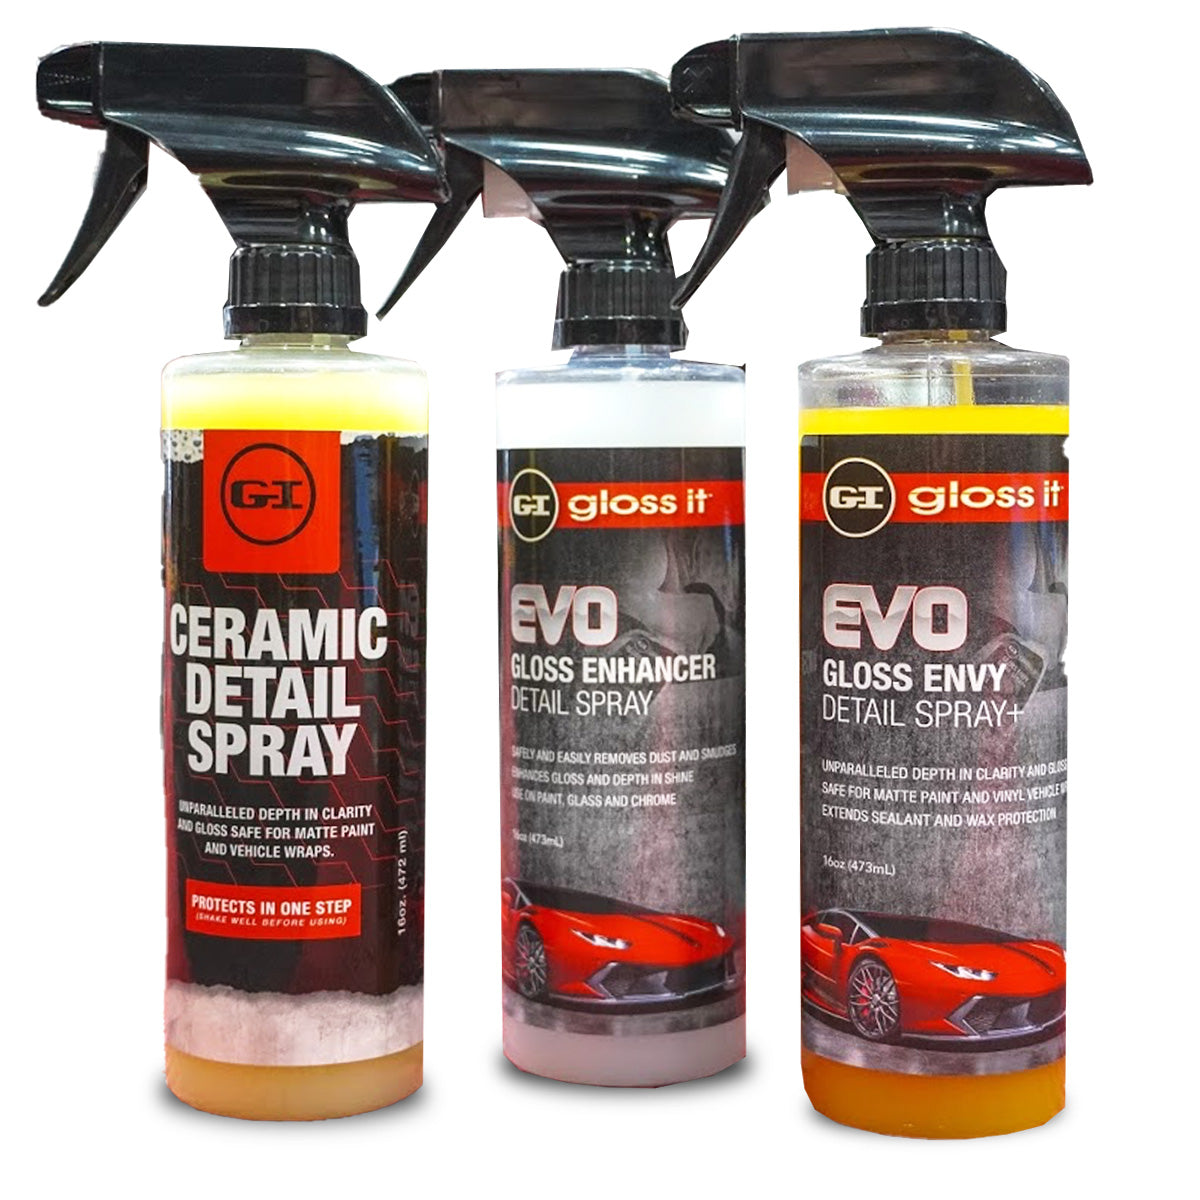 Graphene Ceramic spray / Detroit Surface care